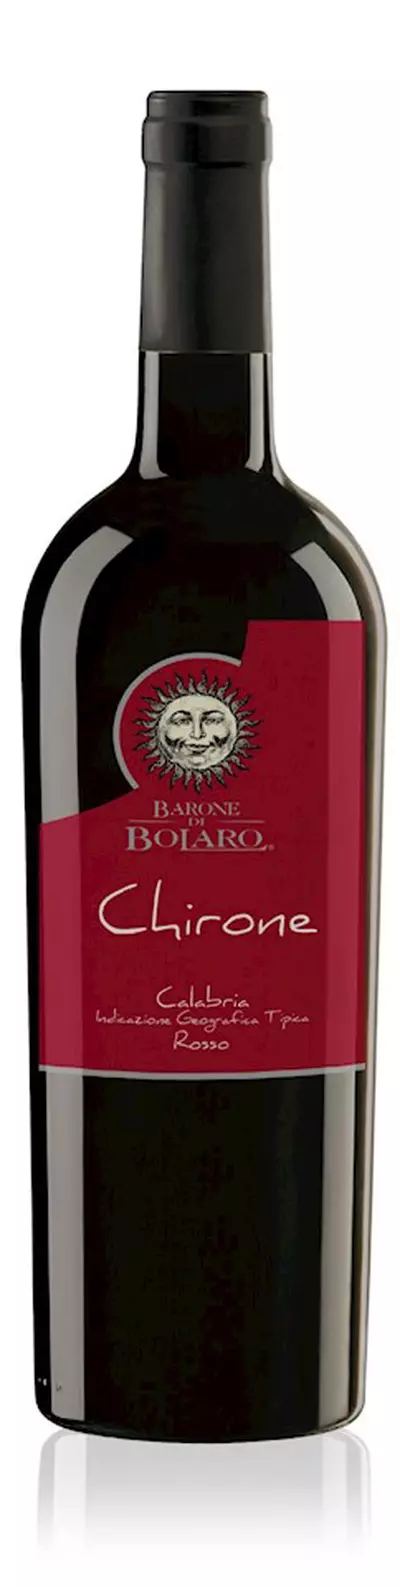 Chirone I.g.t. Calabria Rosso